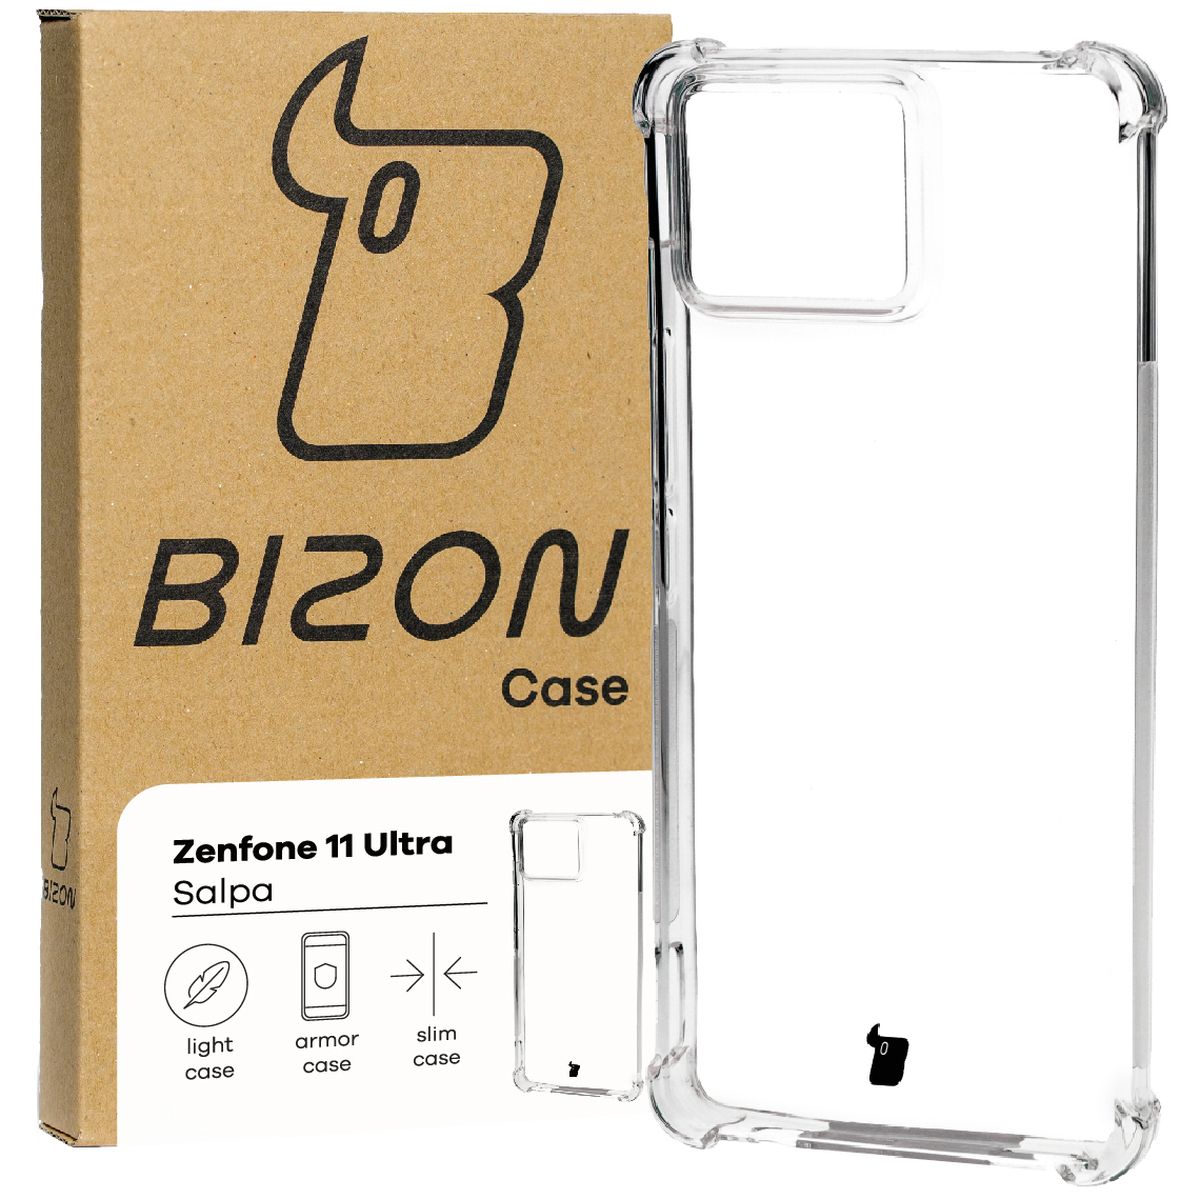 Schutzhülle für Asus Zenfone 11 Ultra, Bizon Case Salpa, Transparent